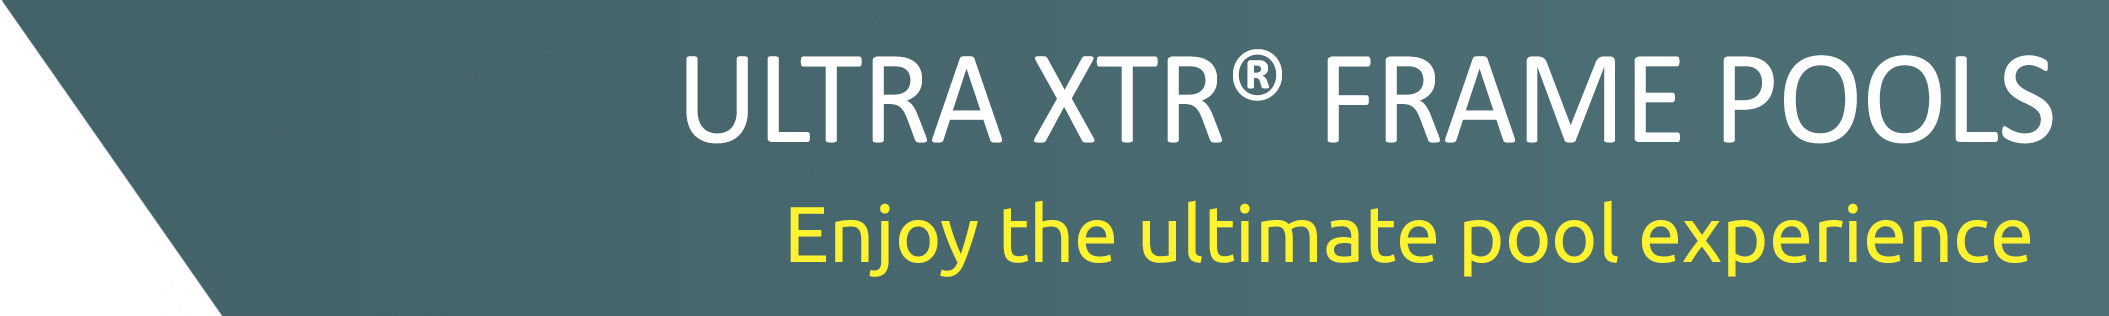 ULTRA XTR® FRAME POOLS